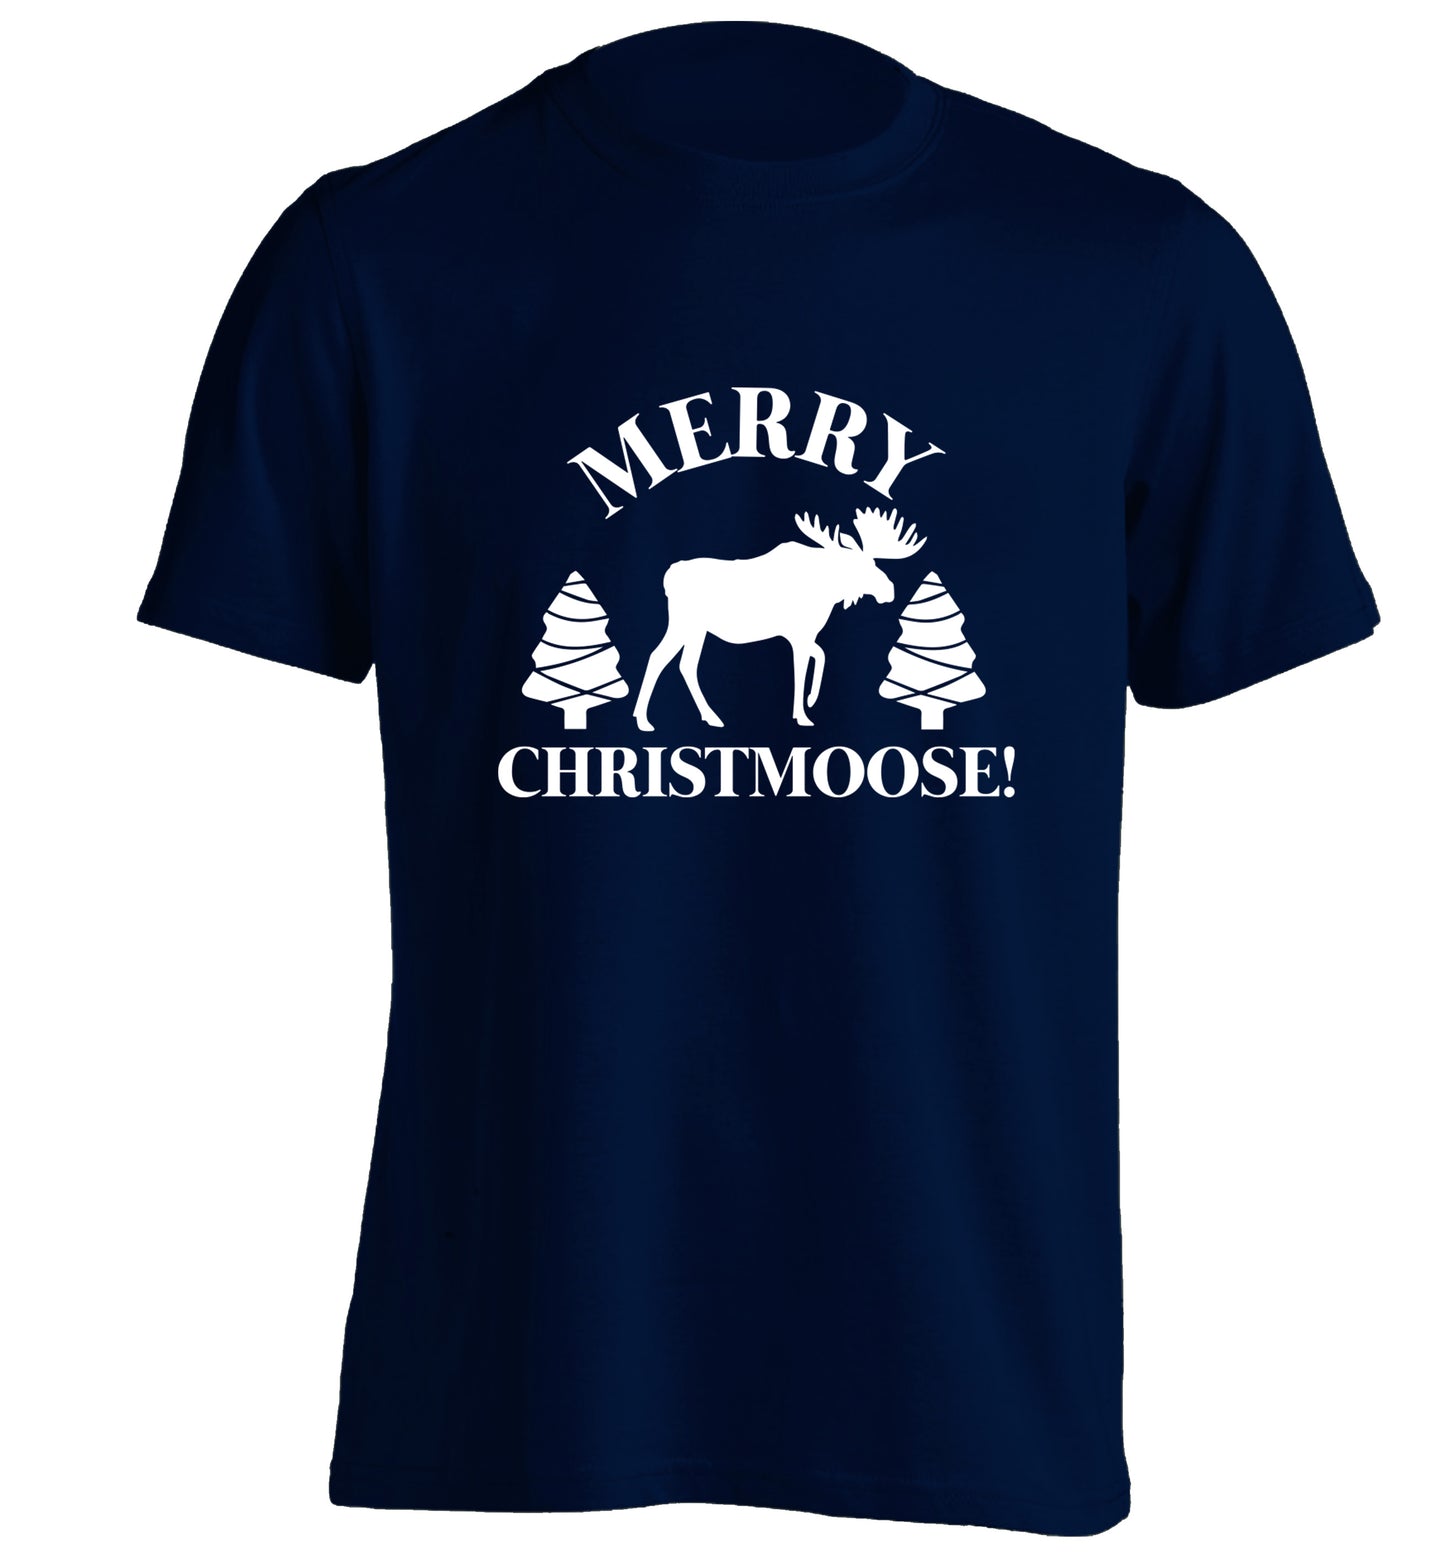 Merry Christmoose adults unisex navy Tshirt 2XL